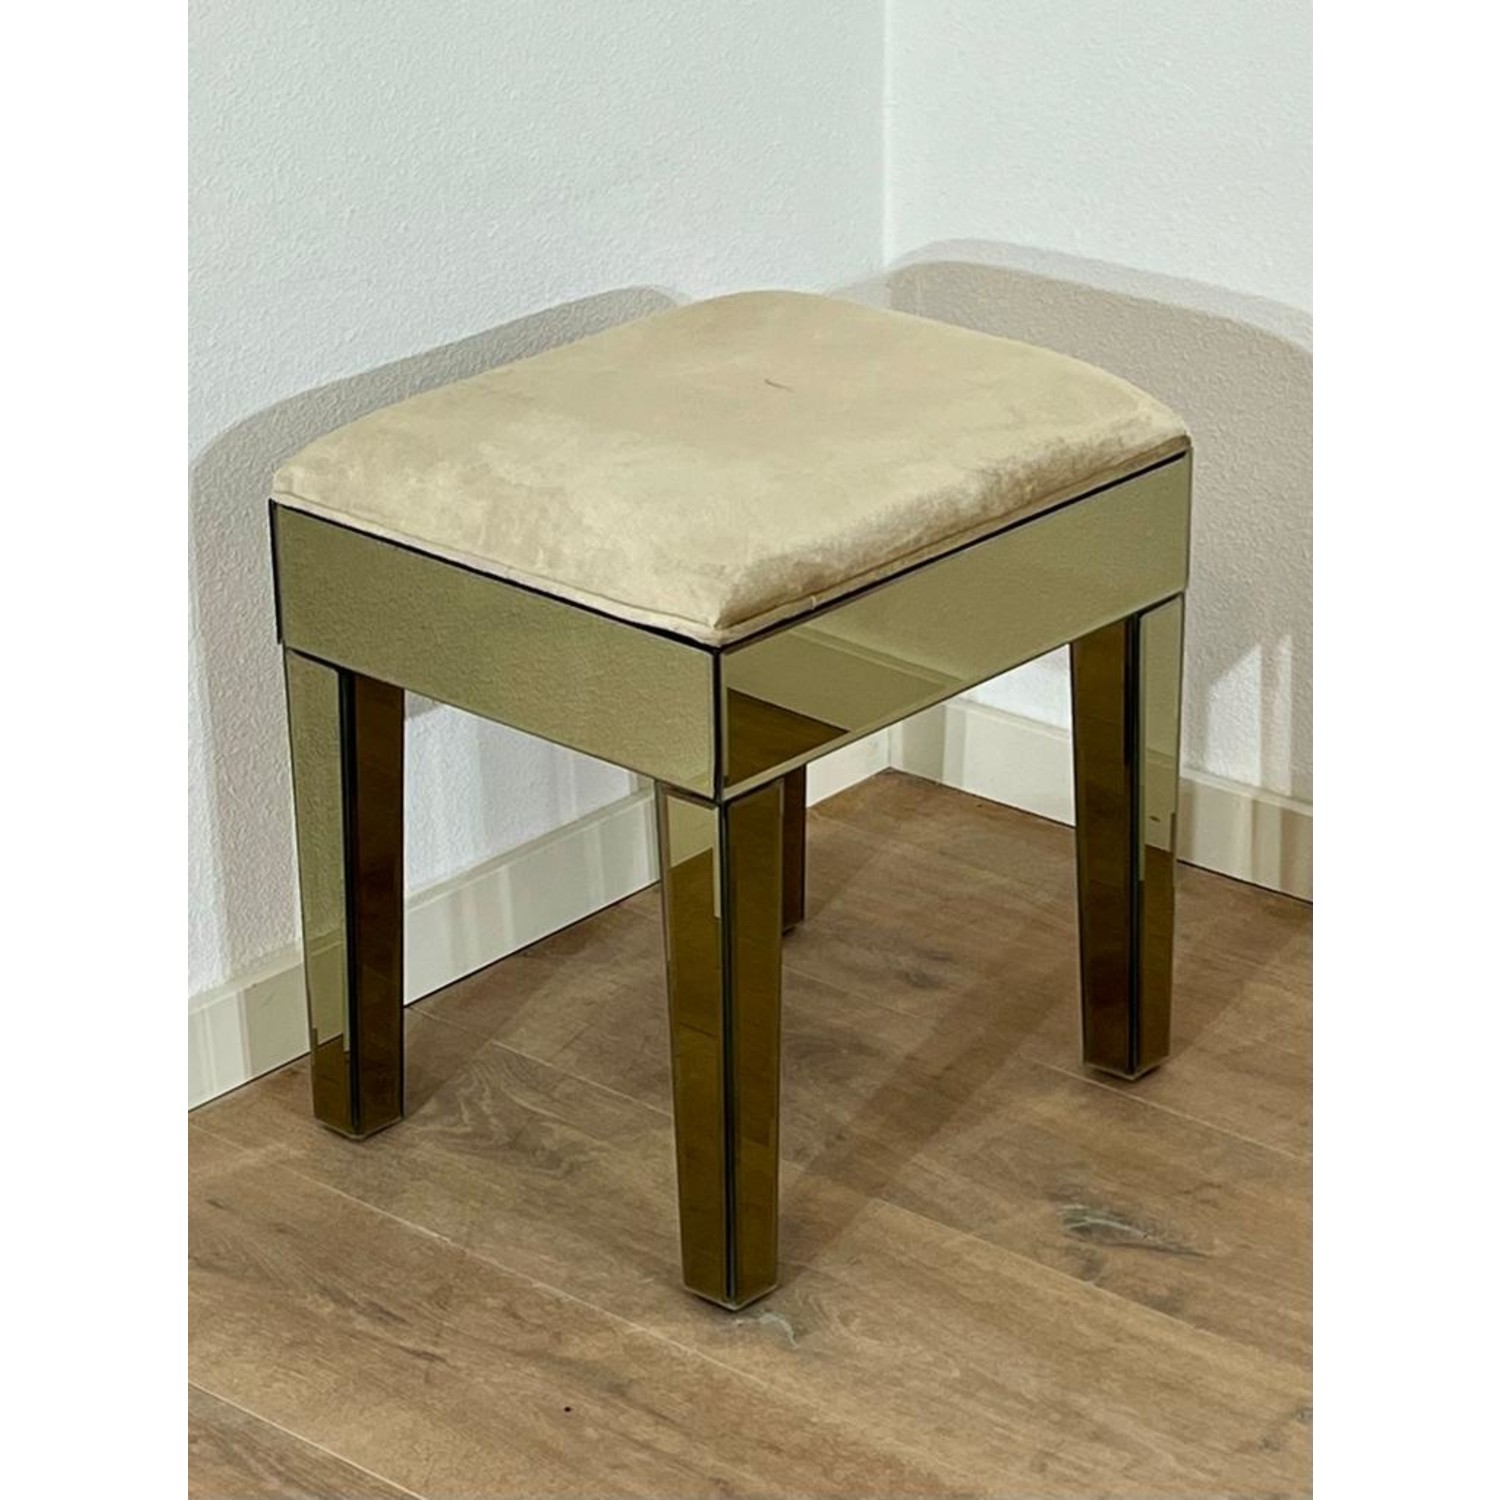 Taburete terciopelo - furniture - by owner - sale - craigslist